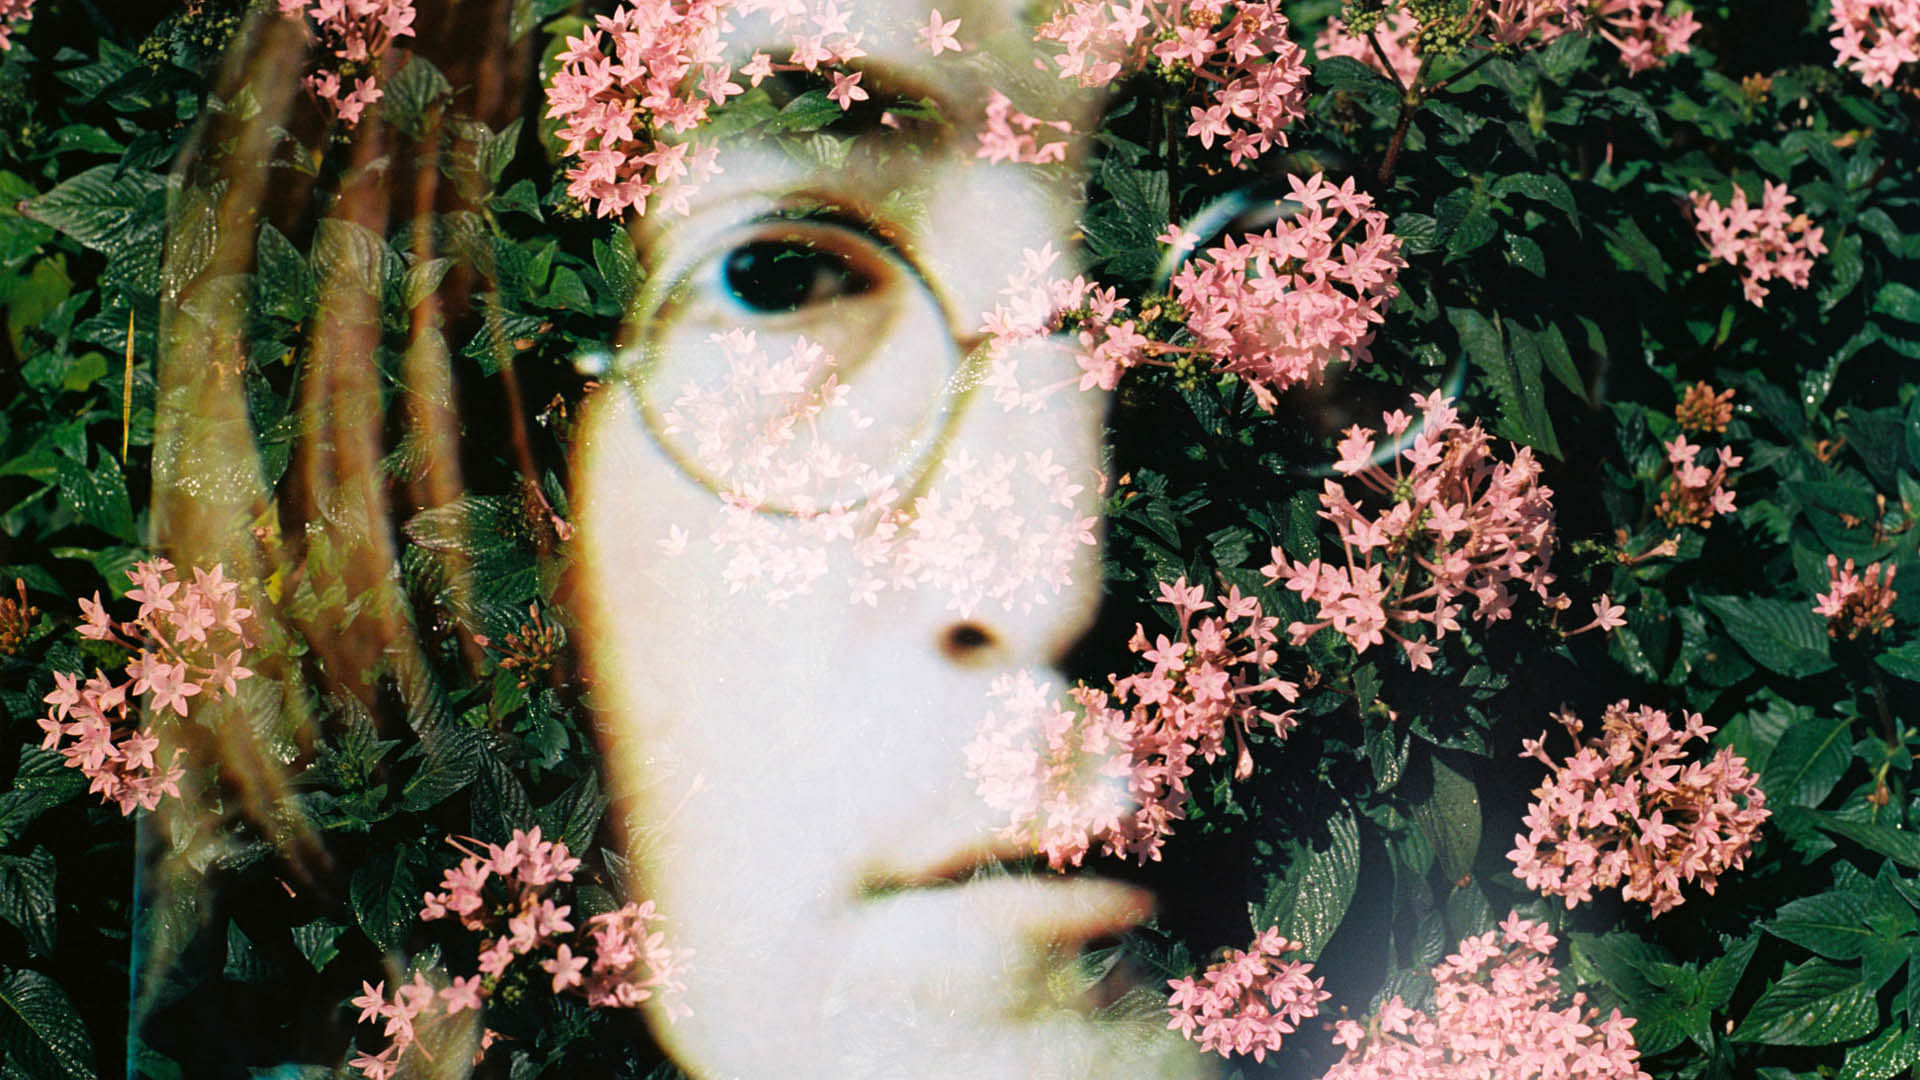 Remembering John Lennon on his birth anniversary. 